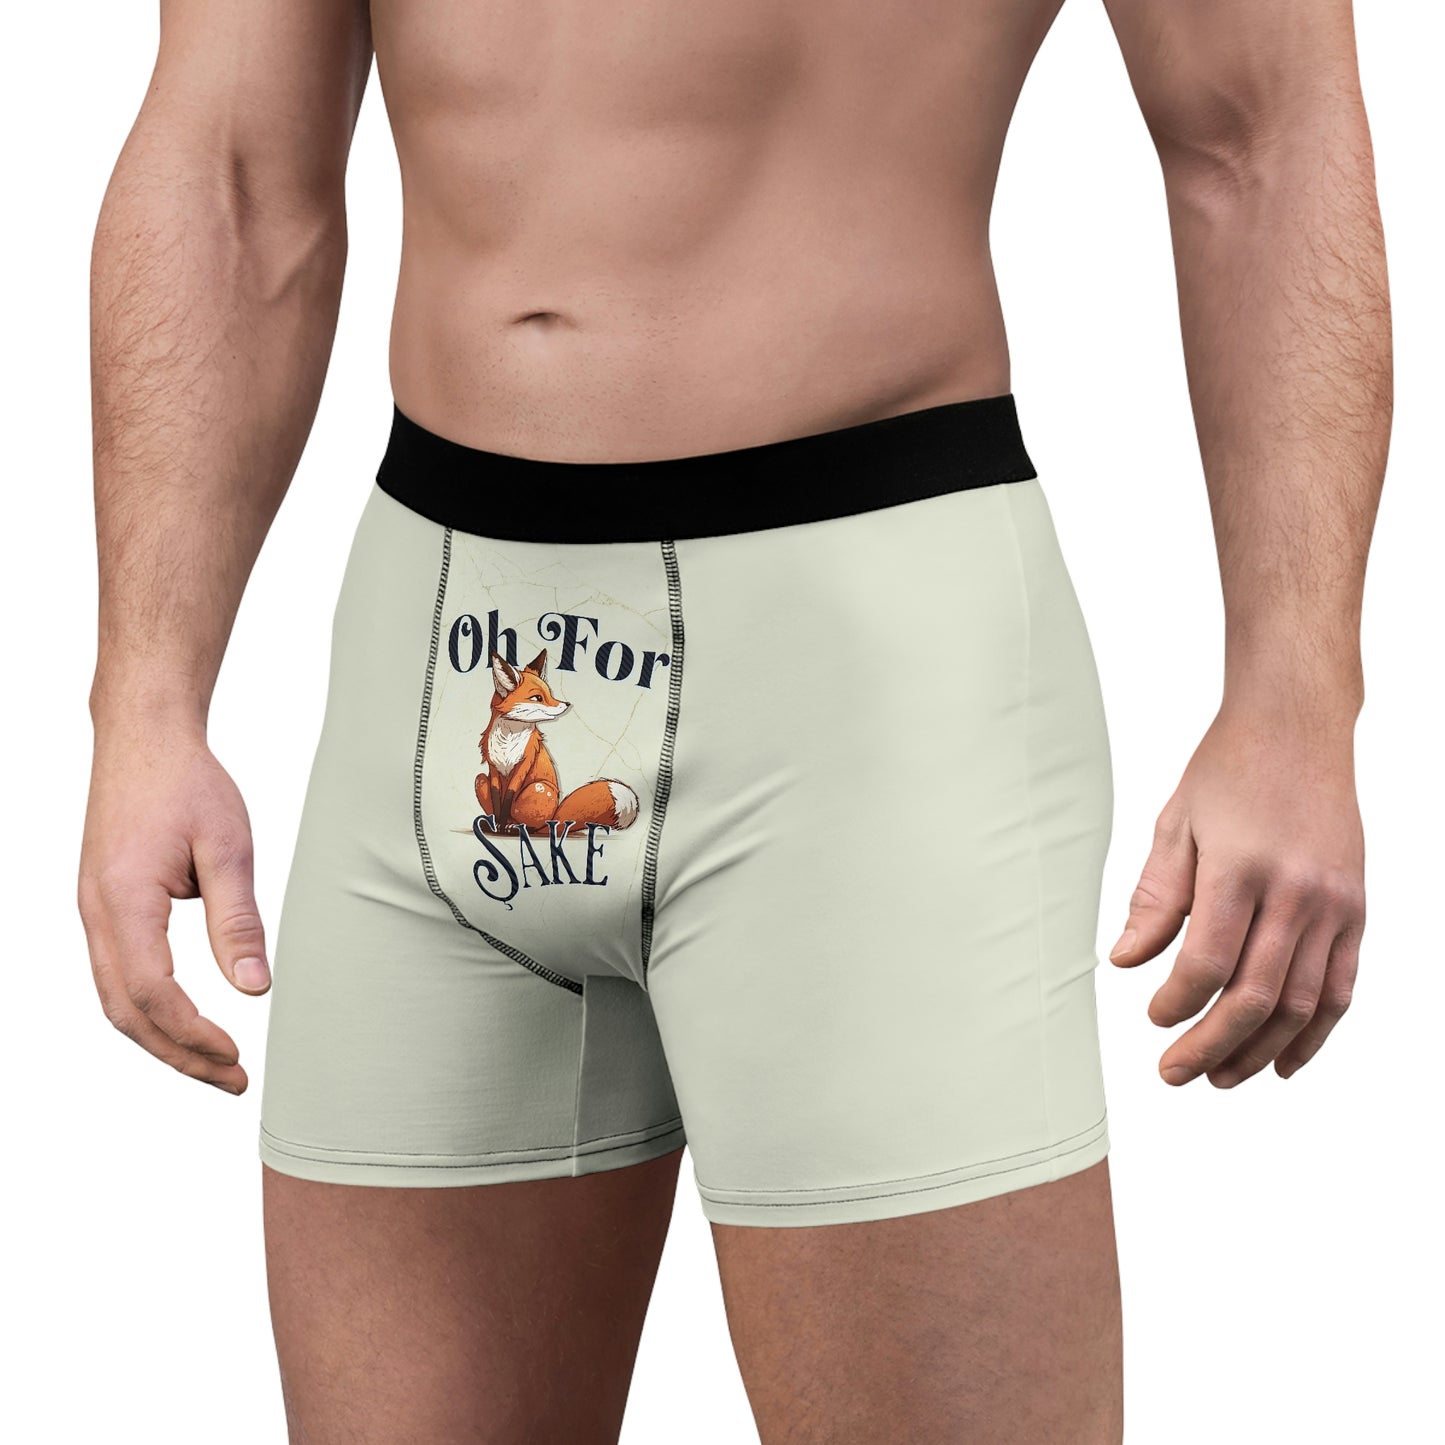 Oh For Fox Sake Boxers for Men, Boyfriend Xmas Gift, Newlywed Gift, Underwear Men, Men's Boxer Briefs - Sand